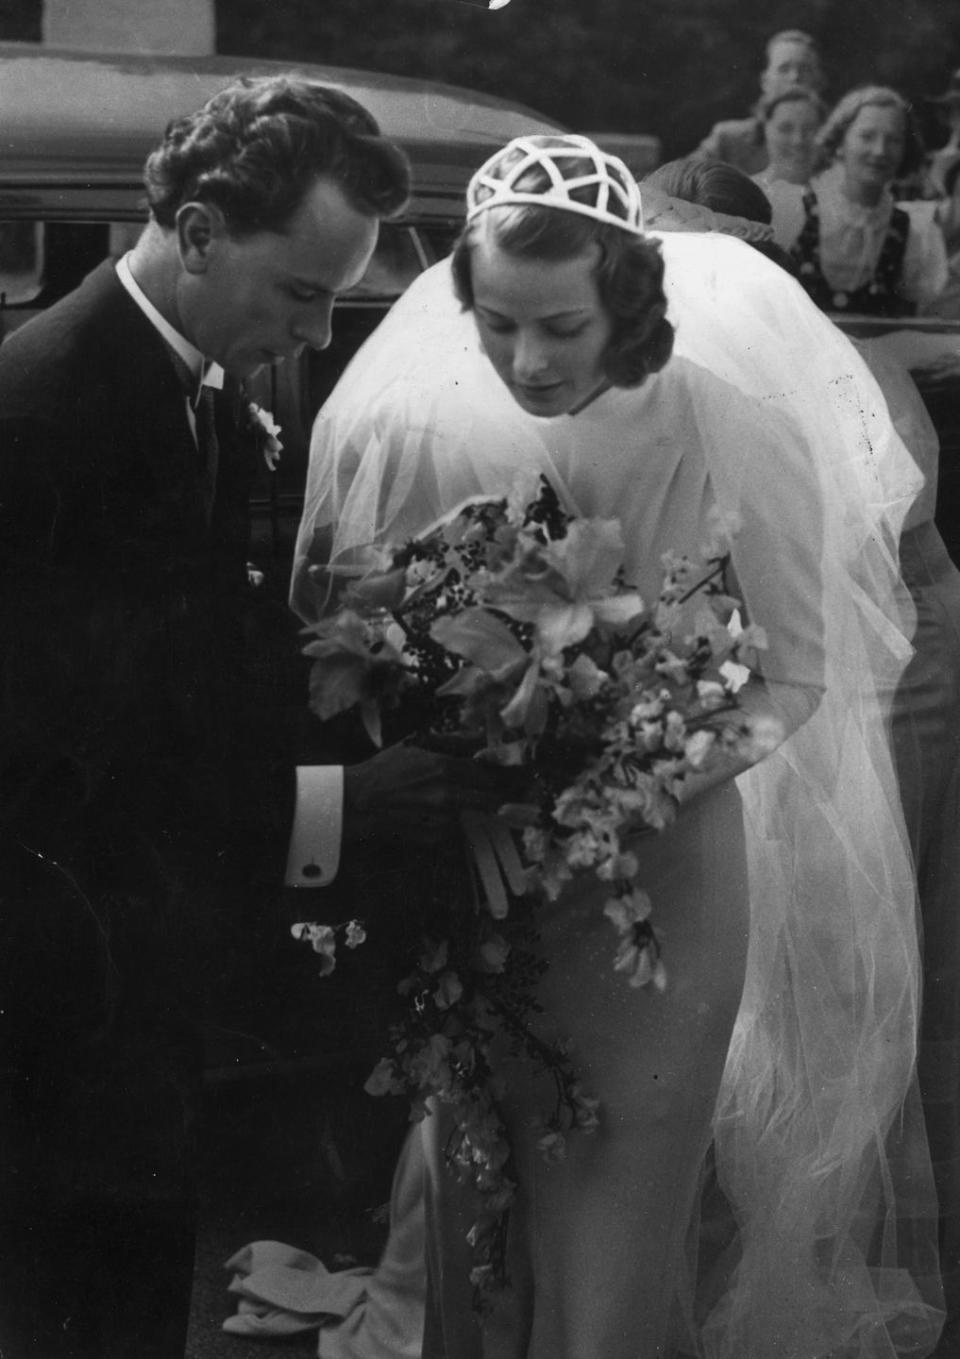 1937: Ingrid Bergman and Petter Lindstrom